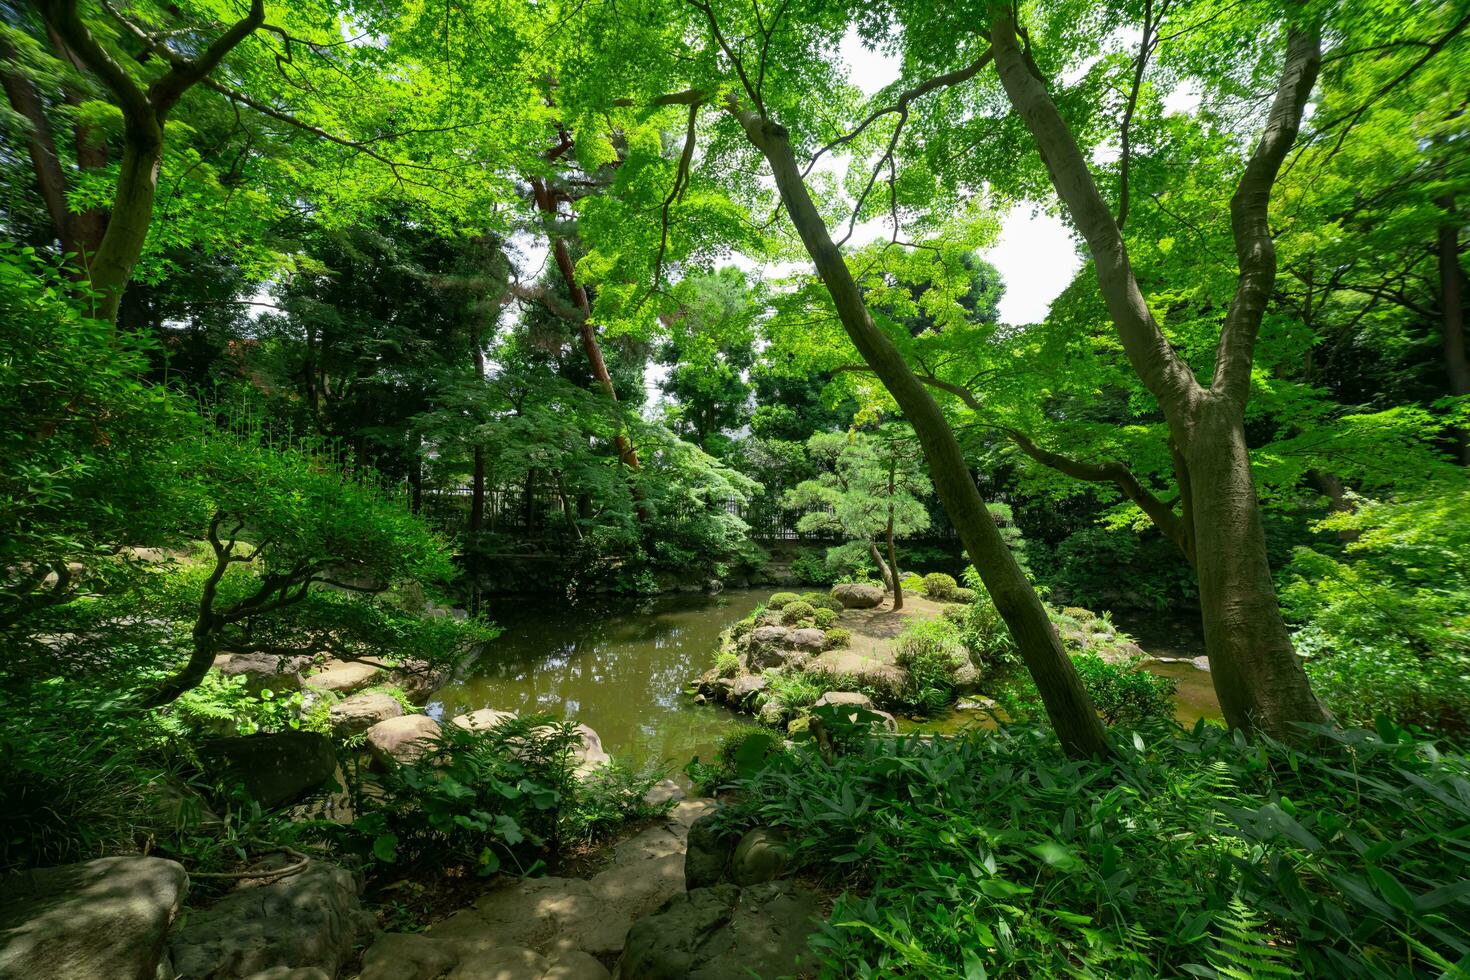 een Japans tuin vijver Bij tonogayato tuin in zomer zonnig dag foto